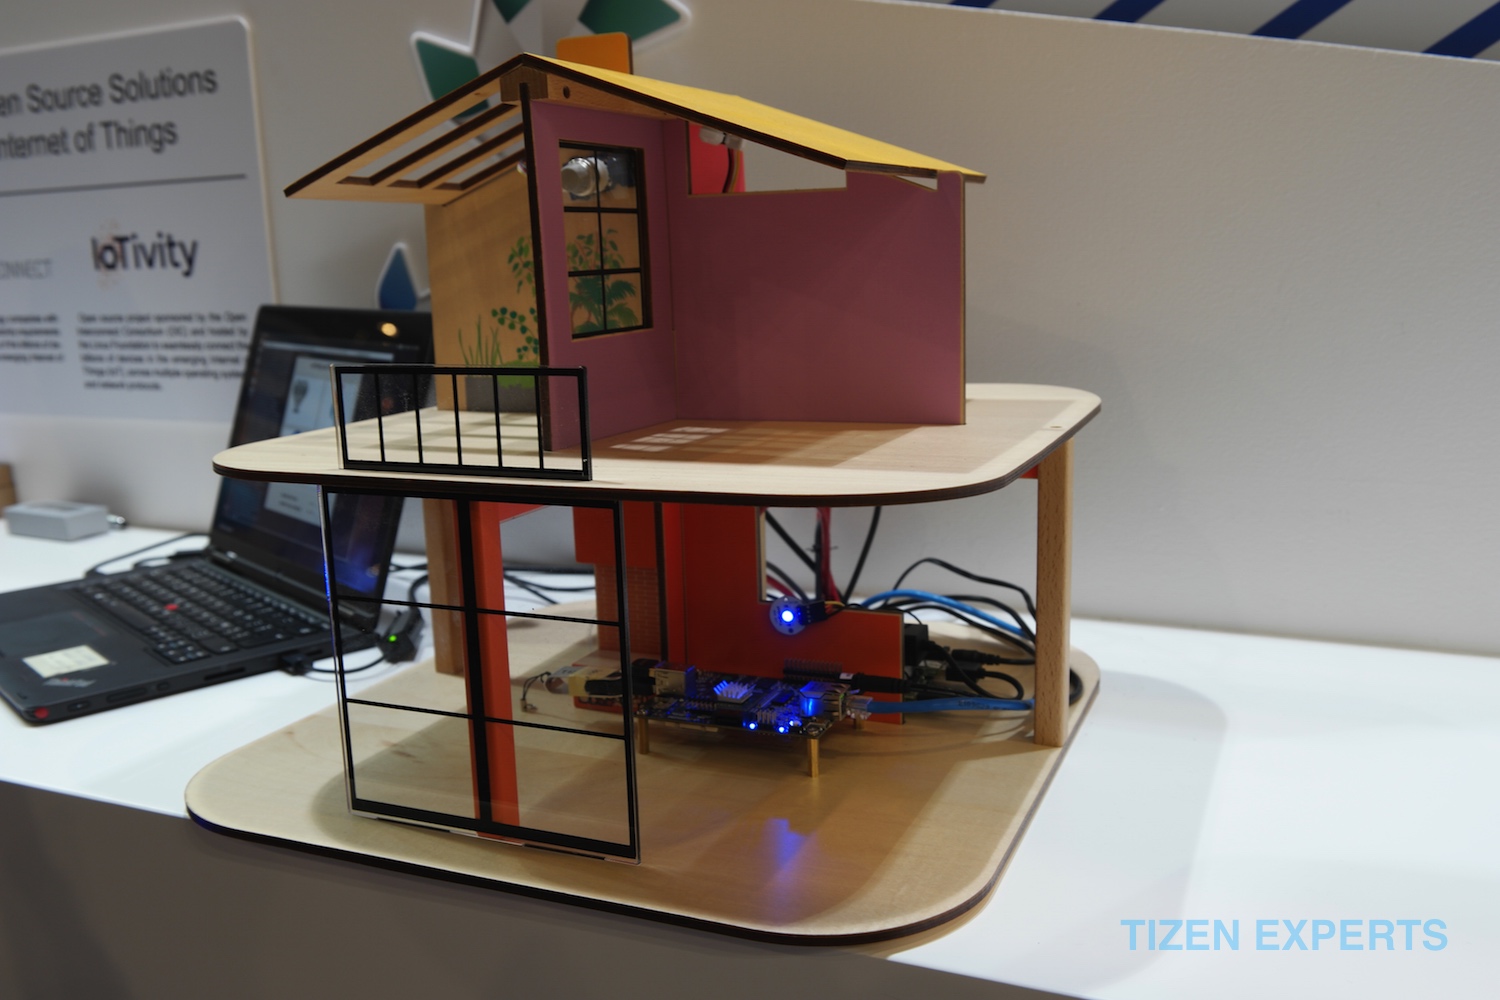 Tizen-IoT-IoTivity-Dev-Linux